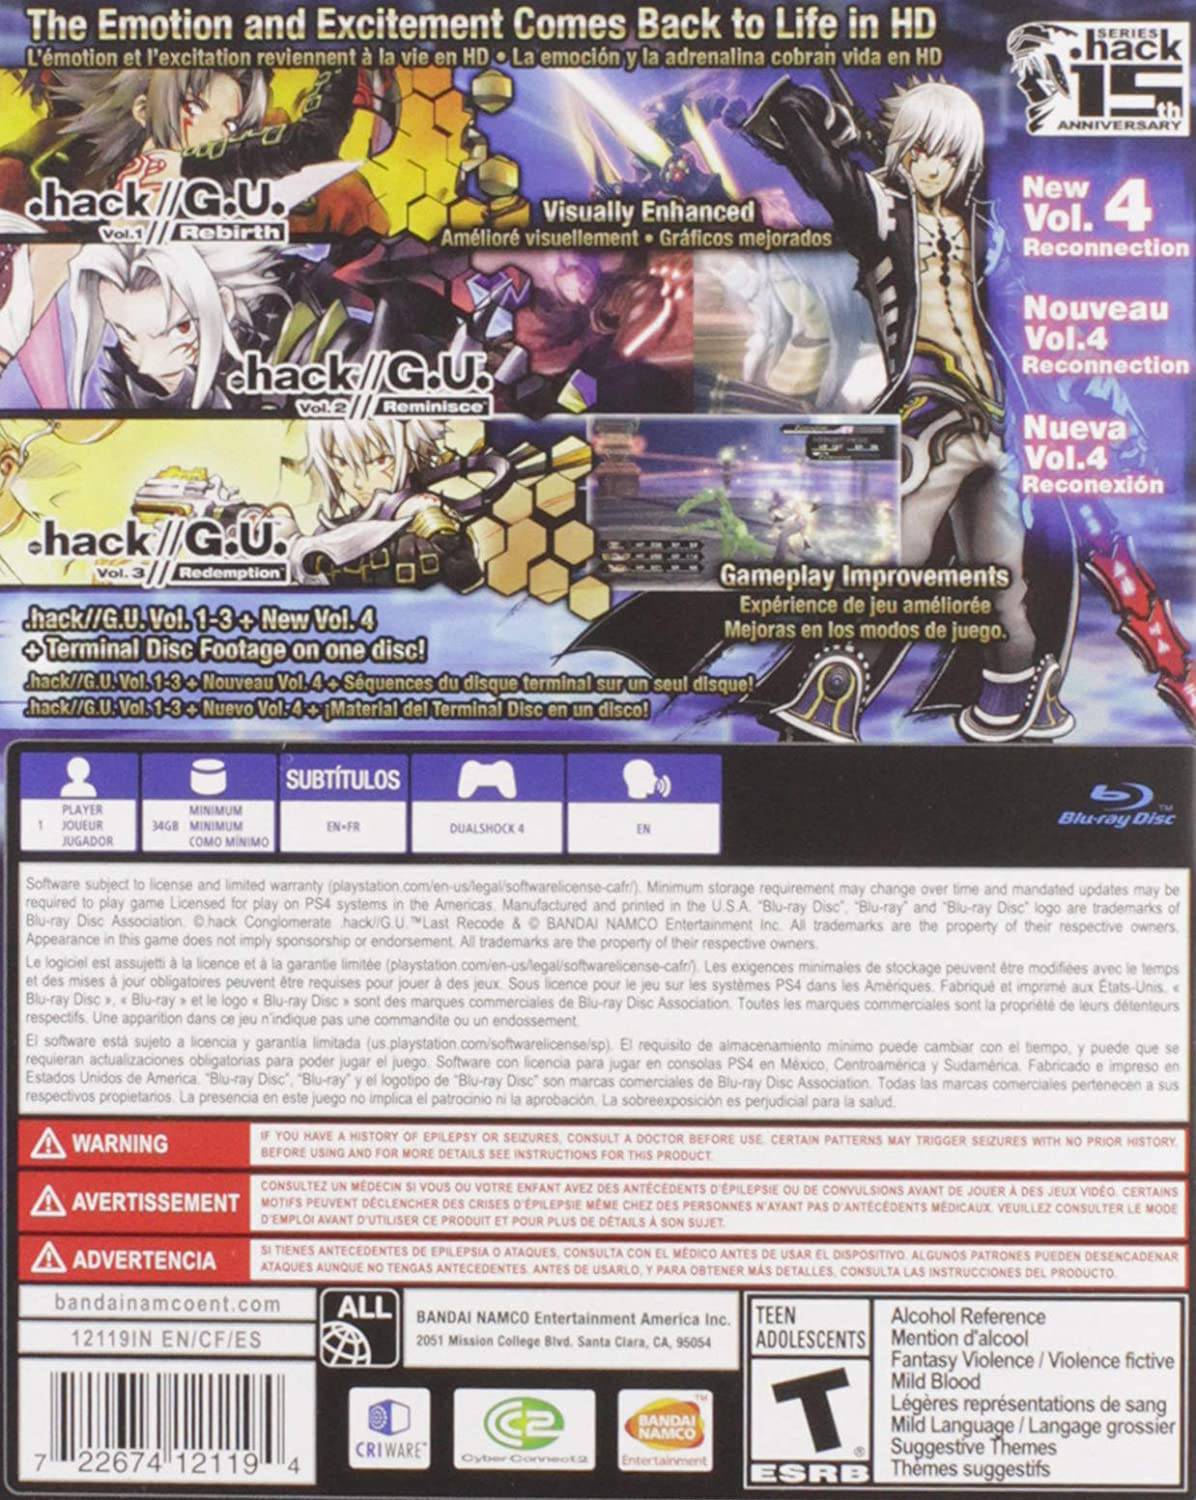 .hack//G/U. Last Recode - Playstation 4 - USED COPY King Gaming 